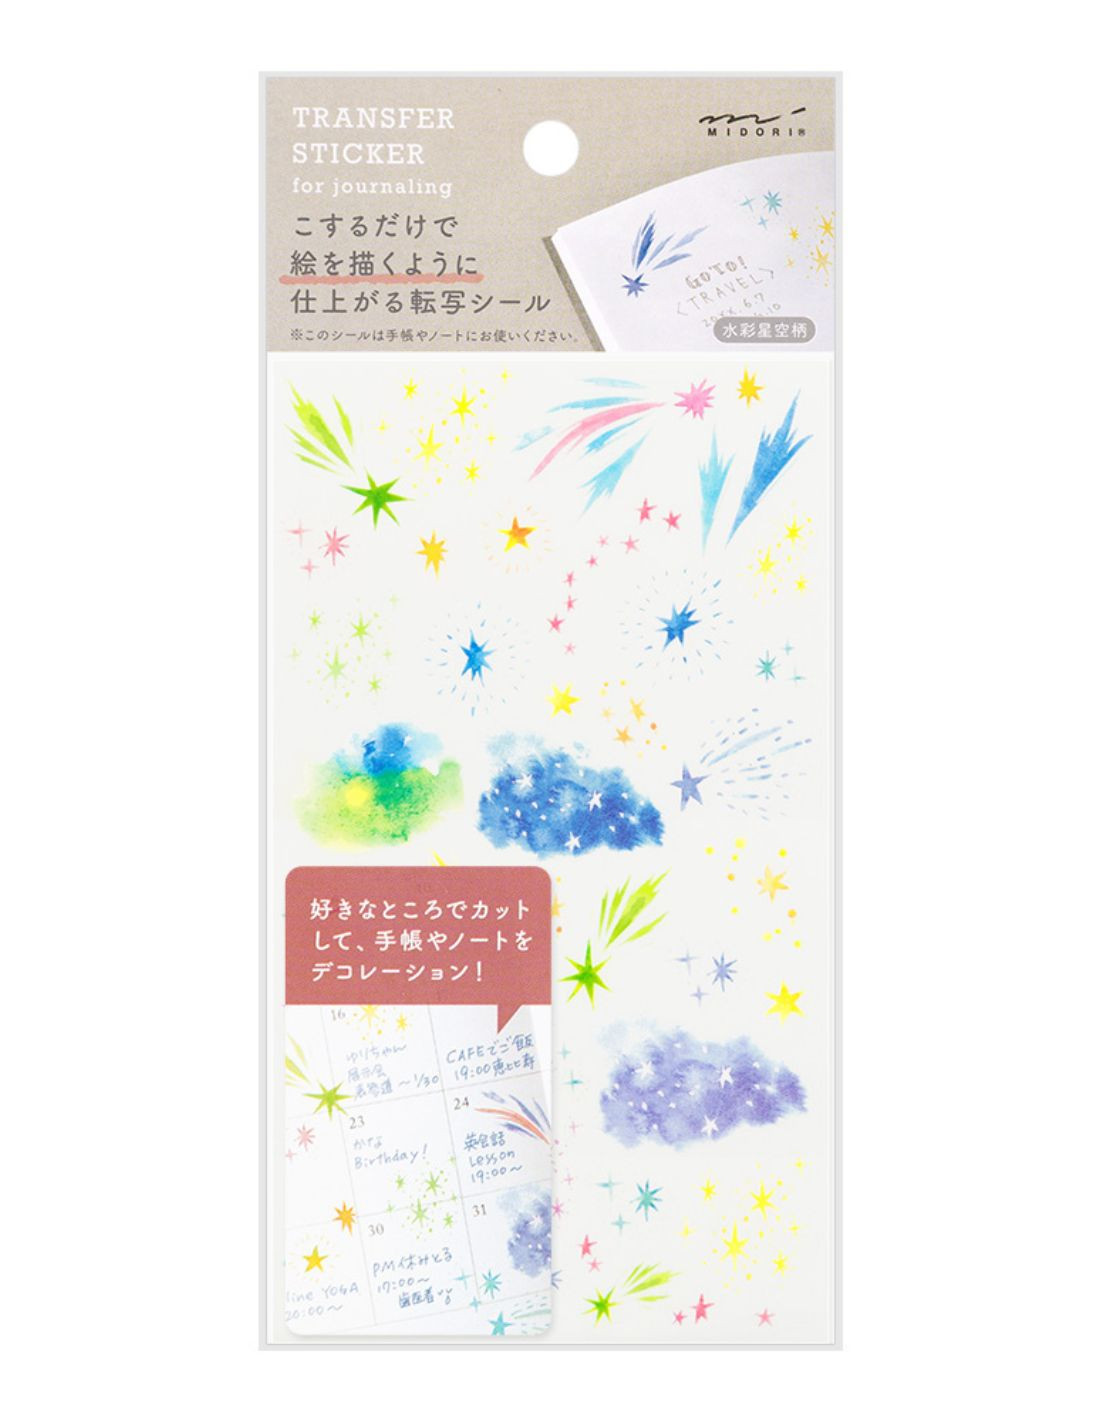 Stickers Midori Transfer - Ciel étoilé aquarelle